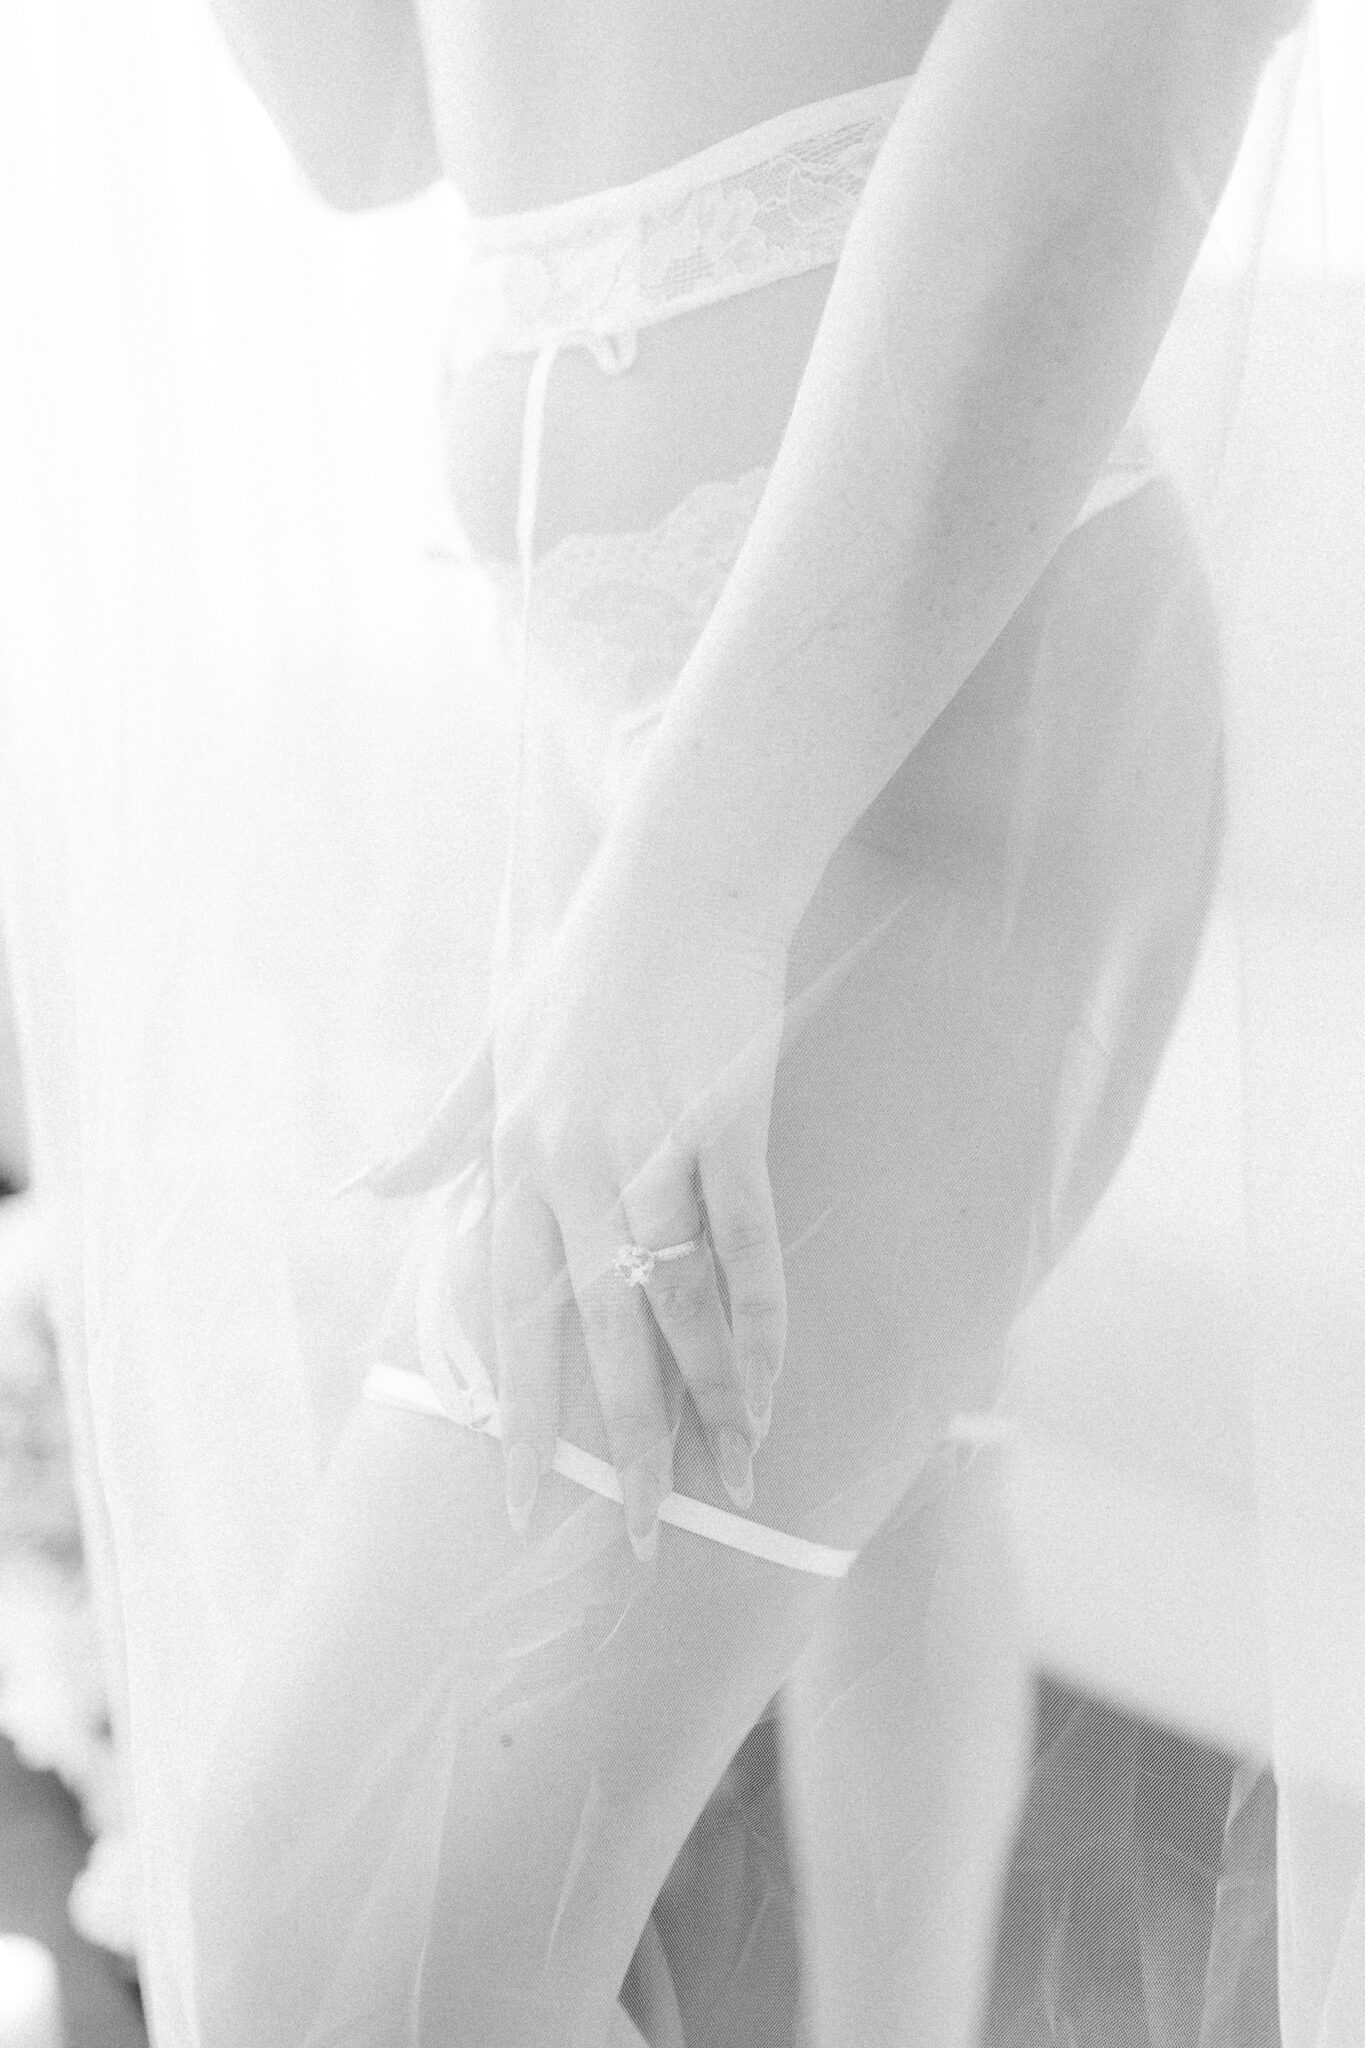 Black and white fine art bridal boudoir portrait featuring long wedding veil, intimate portraiture by Tara Jen Photo, bridal boudoir advice